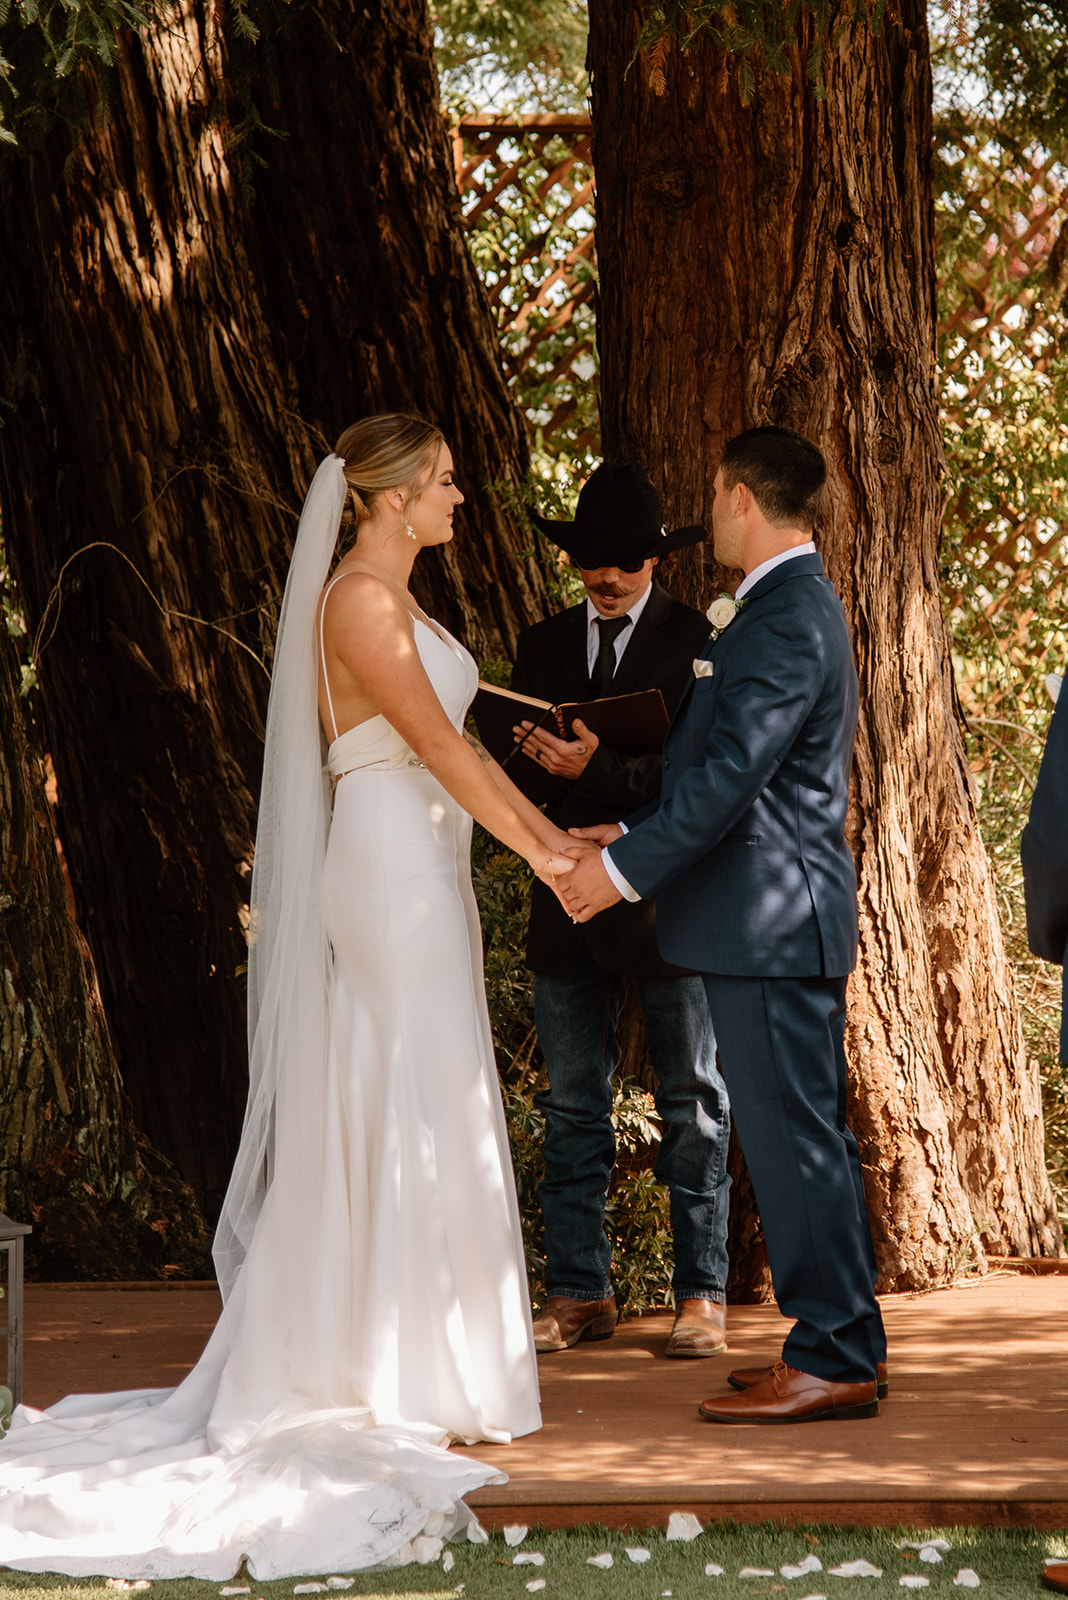 Sydney Jai Photography - Sonoma County wedding photography, wedding ceremony